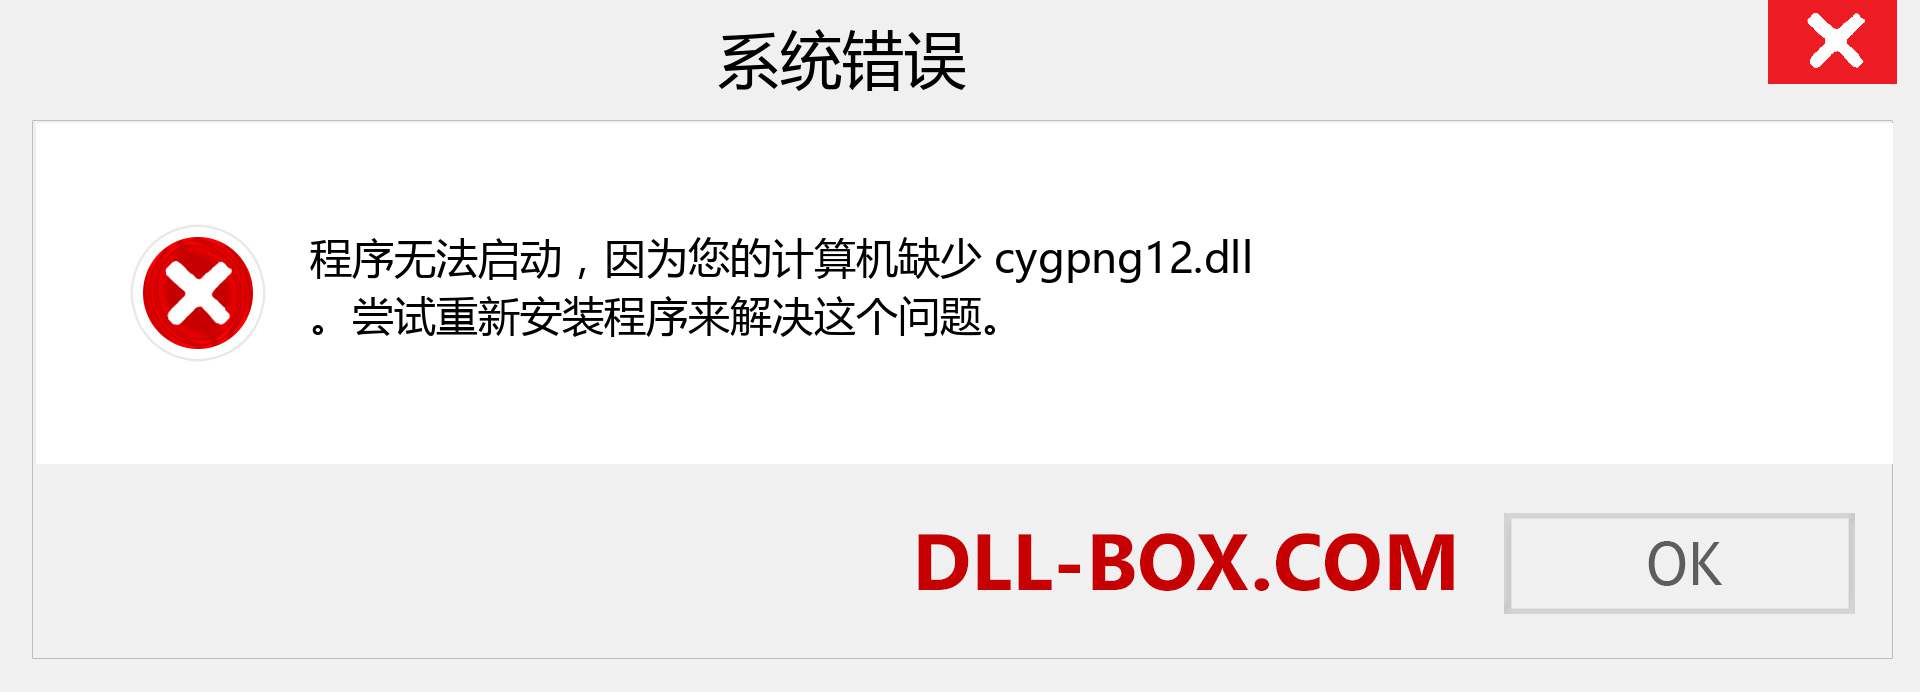 cygpng12.dll 文件丢失？。 适用于 Windows 7、8、10 的下载 - 修复 Windows、照片、图像上的 cygpng12 dll 丢失错误